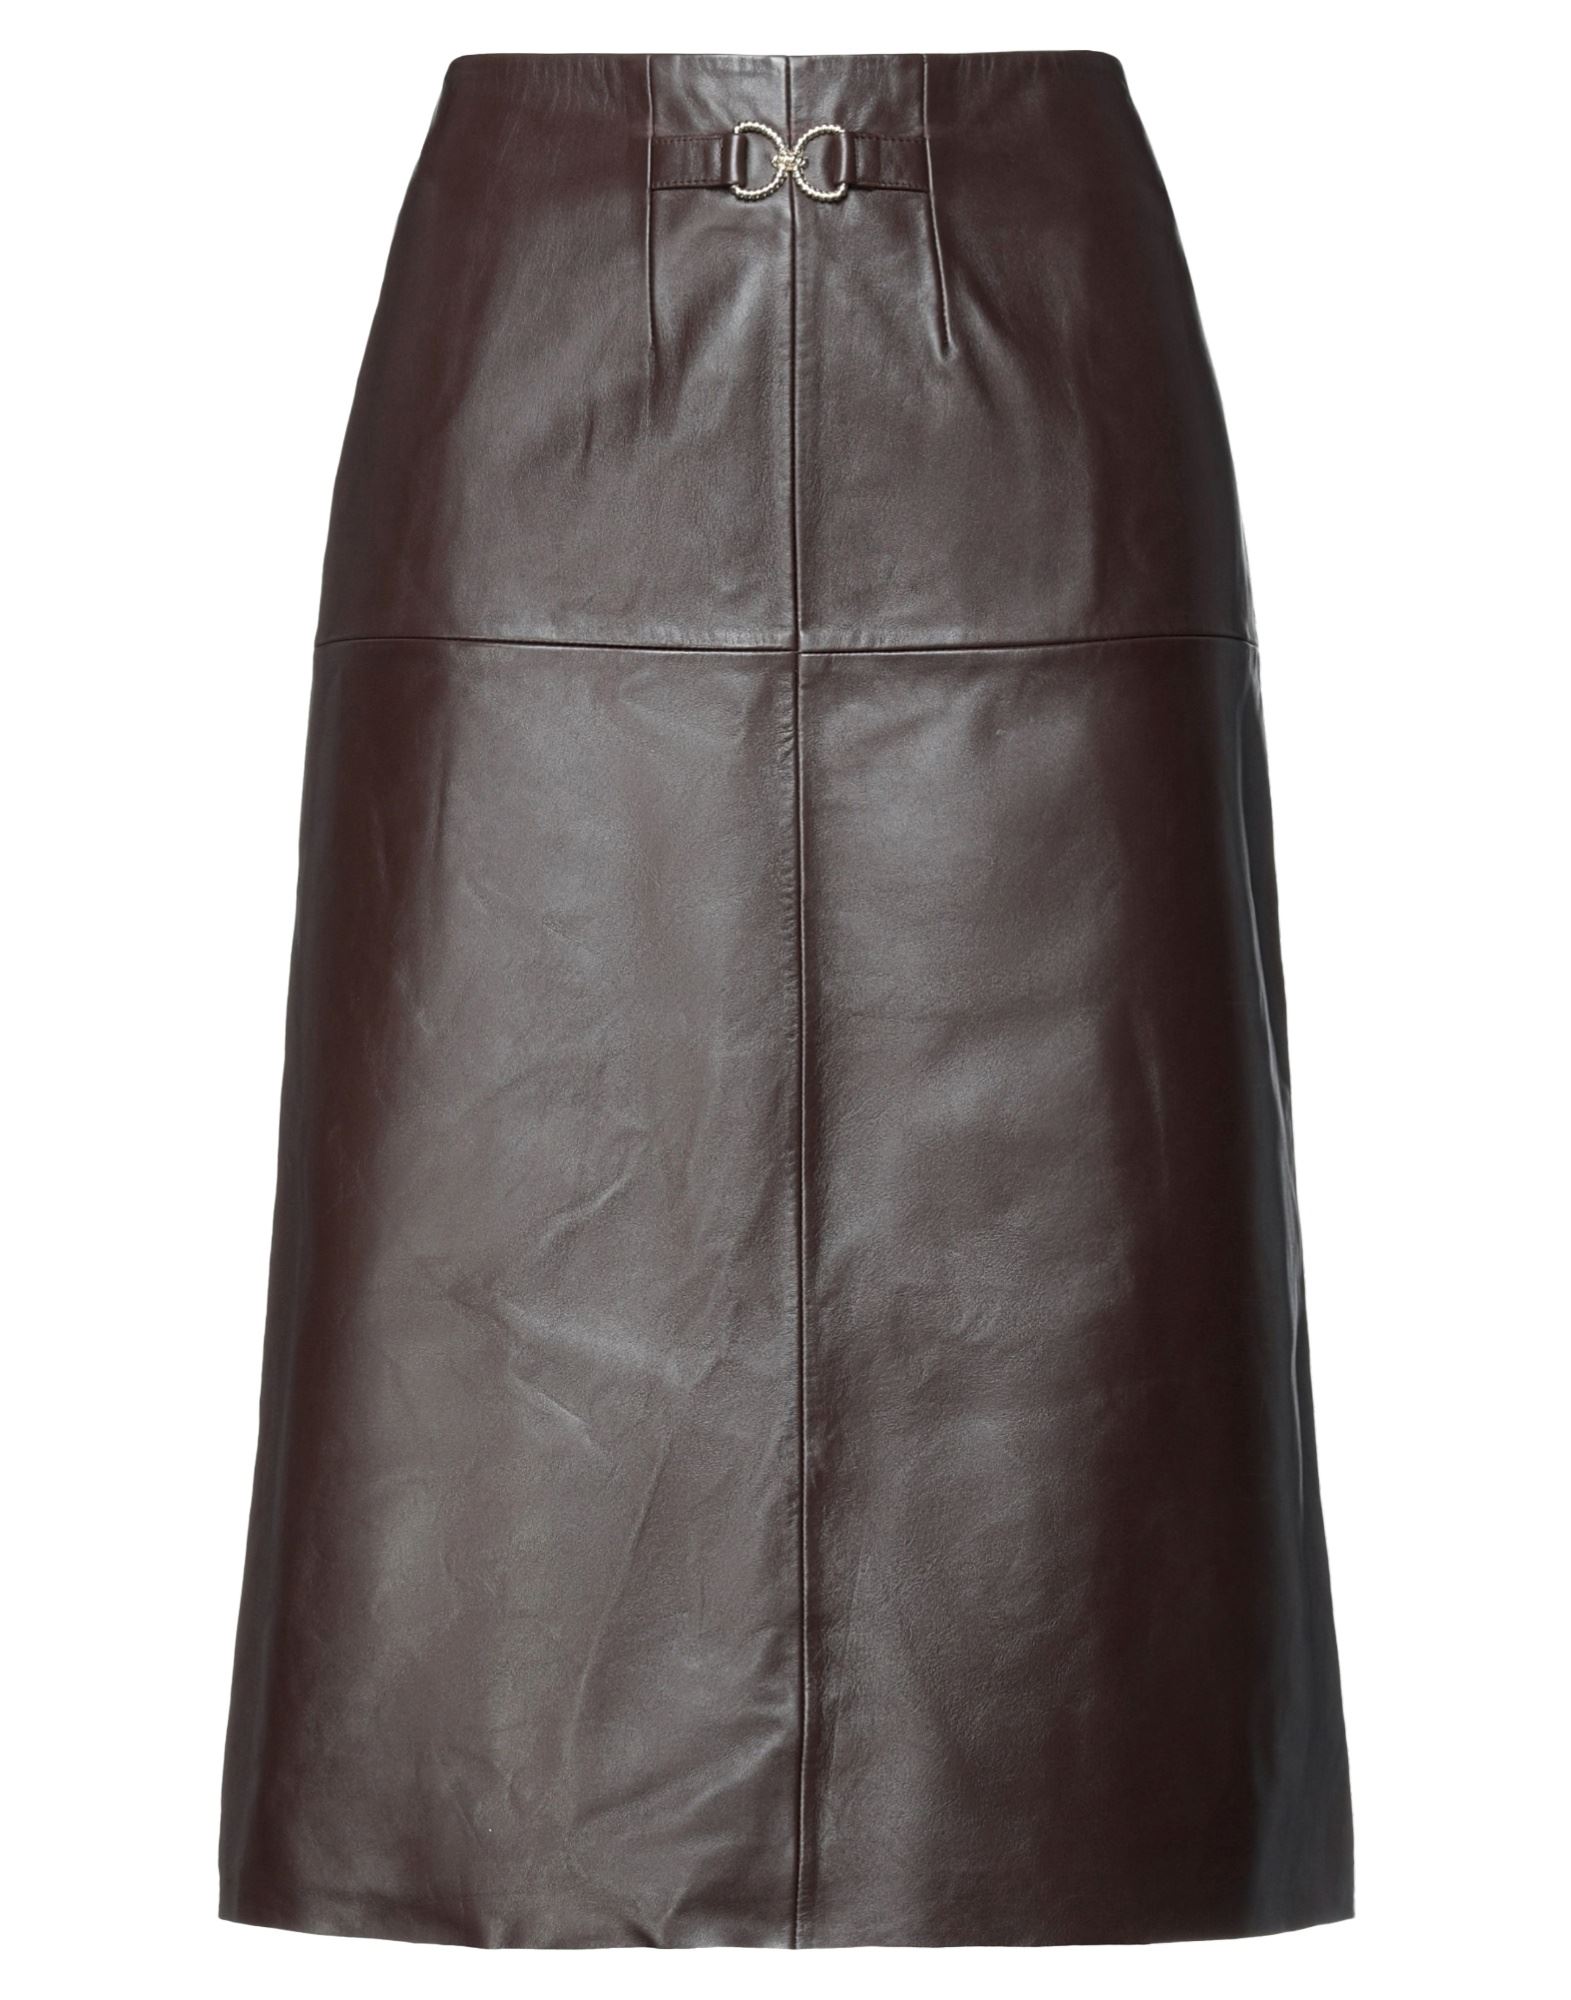 sandro brown leather skirt